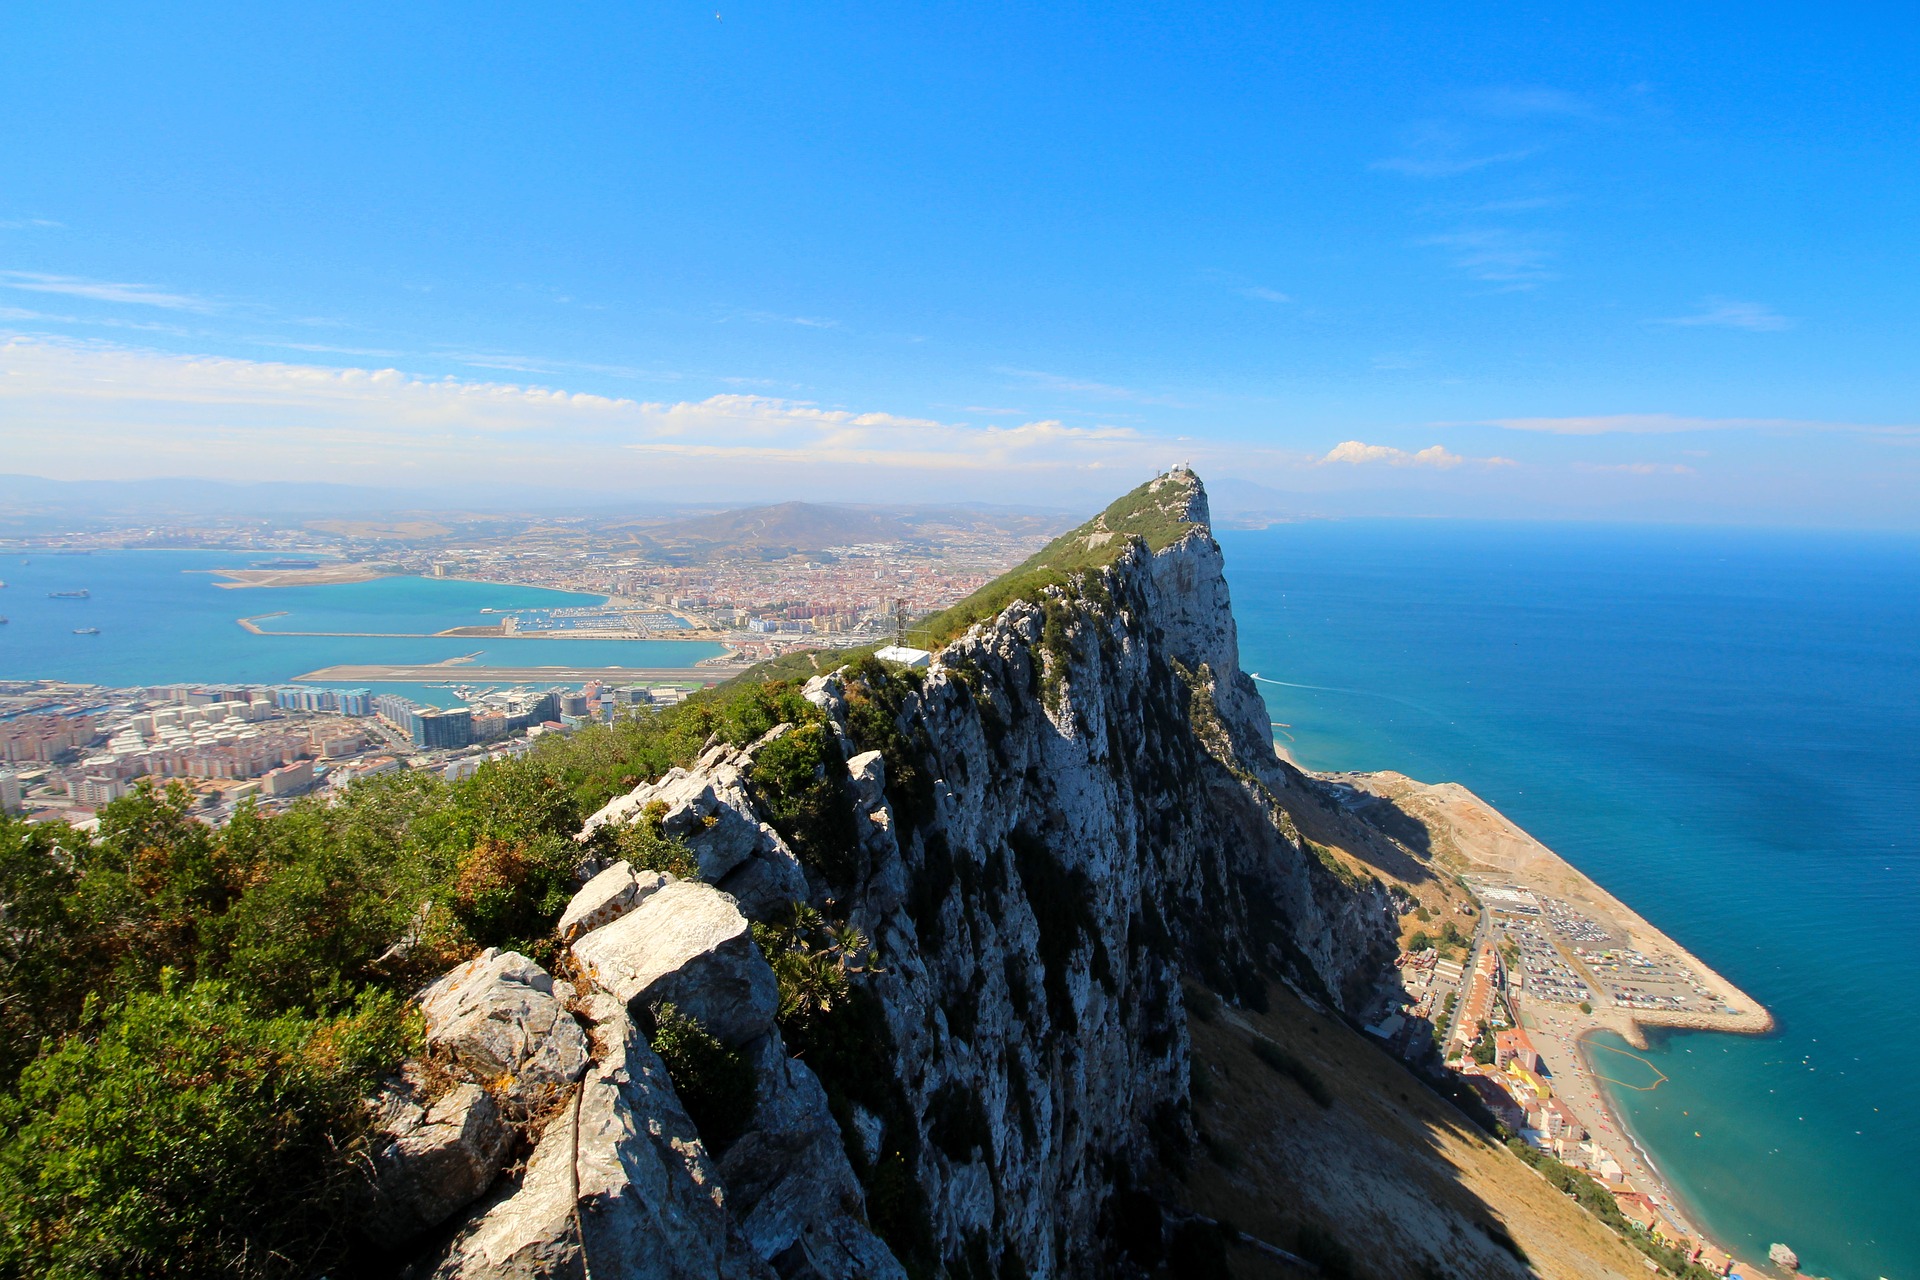 Photo of the Gibraltar rock